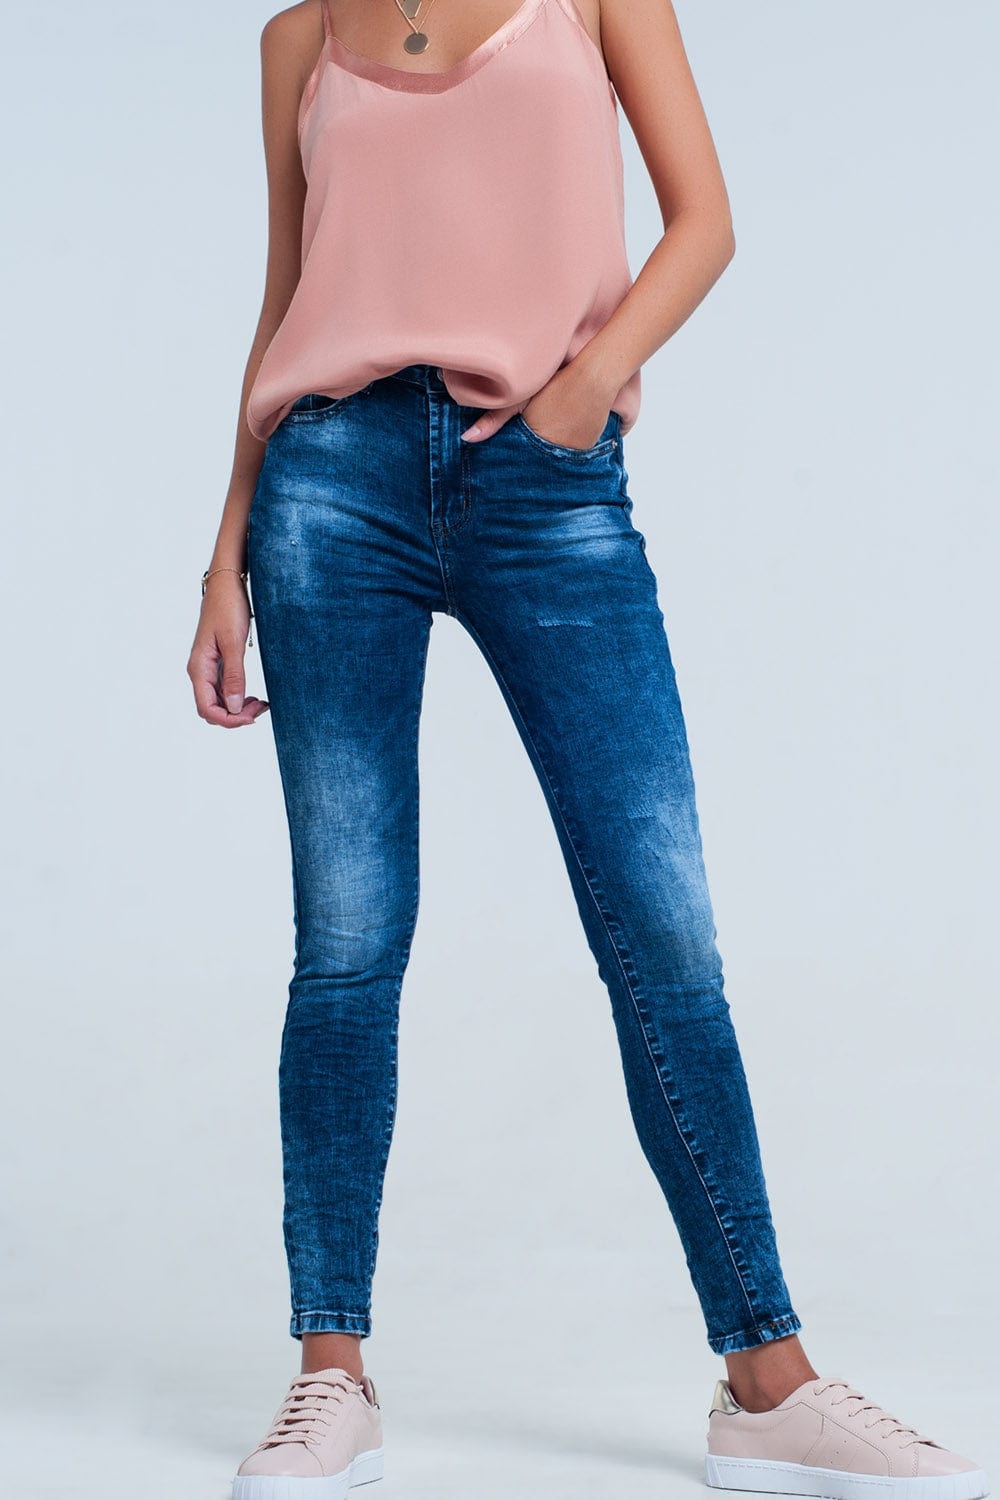 Q2 Women's Jean High waist skinny jeans in bright blue wash